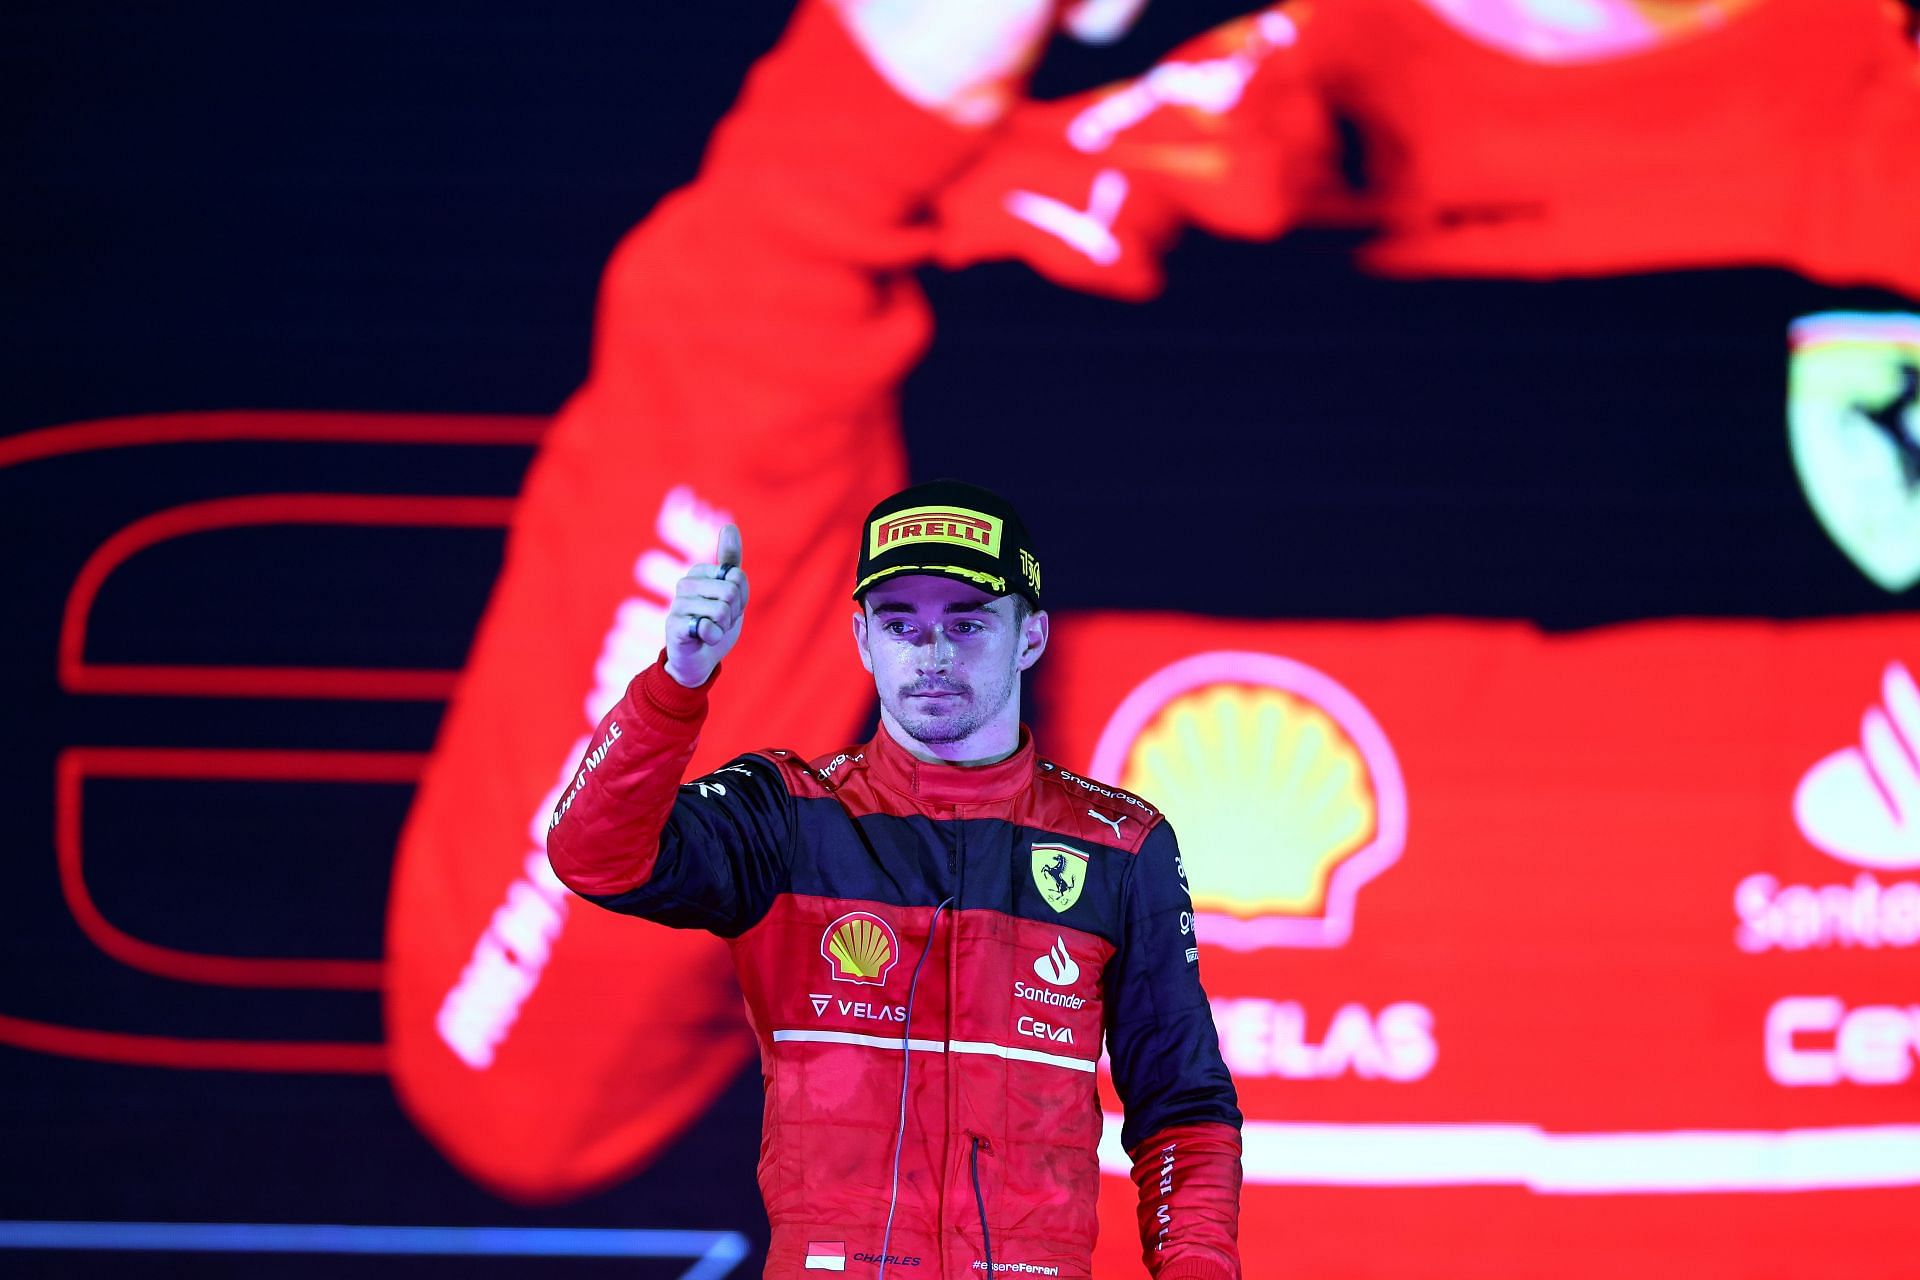 Charles Leclerc at the F1 Grand Prix of Saudi Arabia